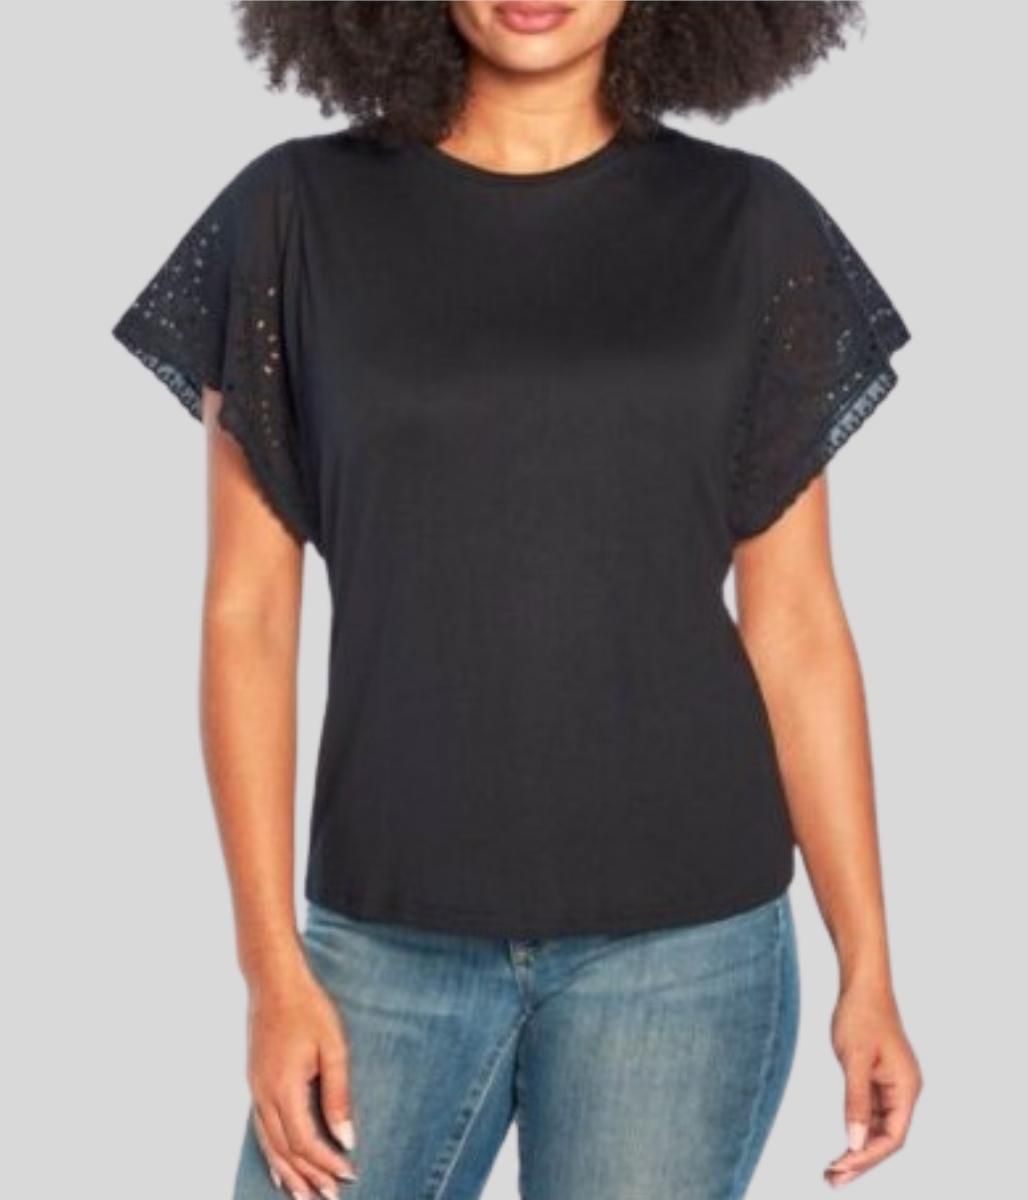 Black Broiderie Sleeve Top  Size XXL (24)